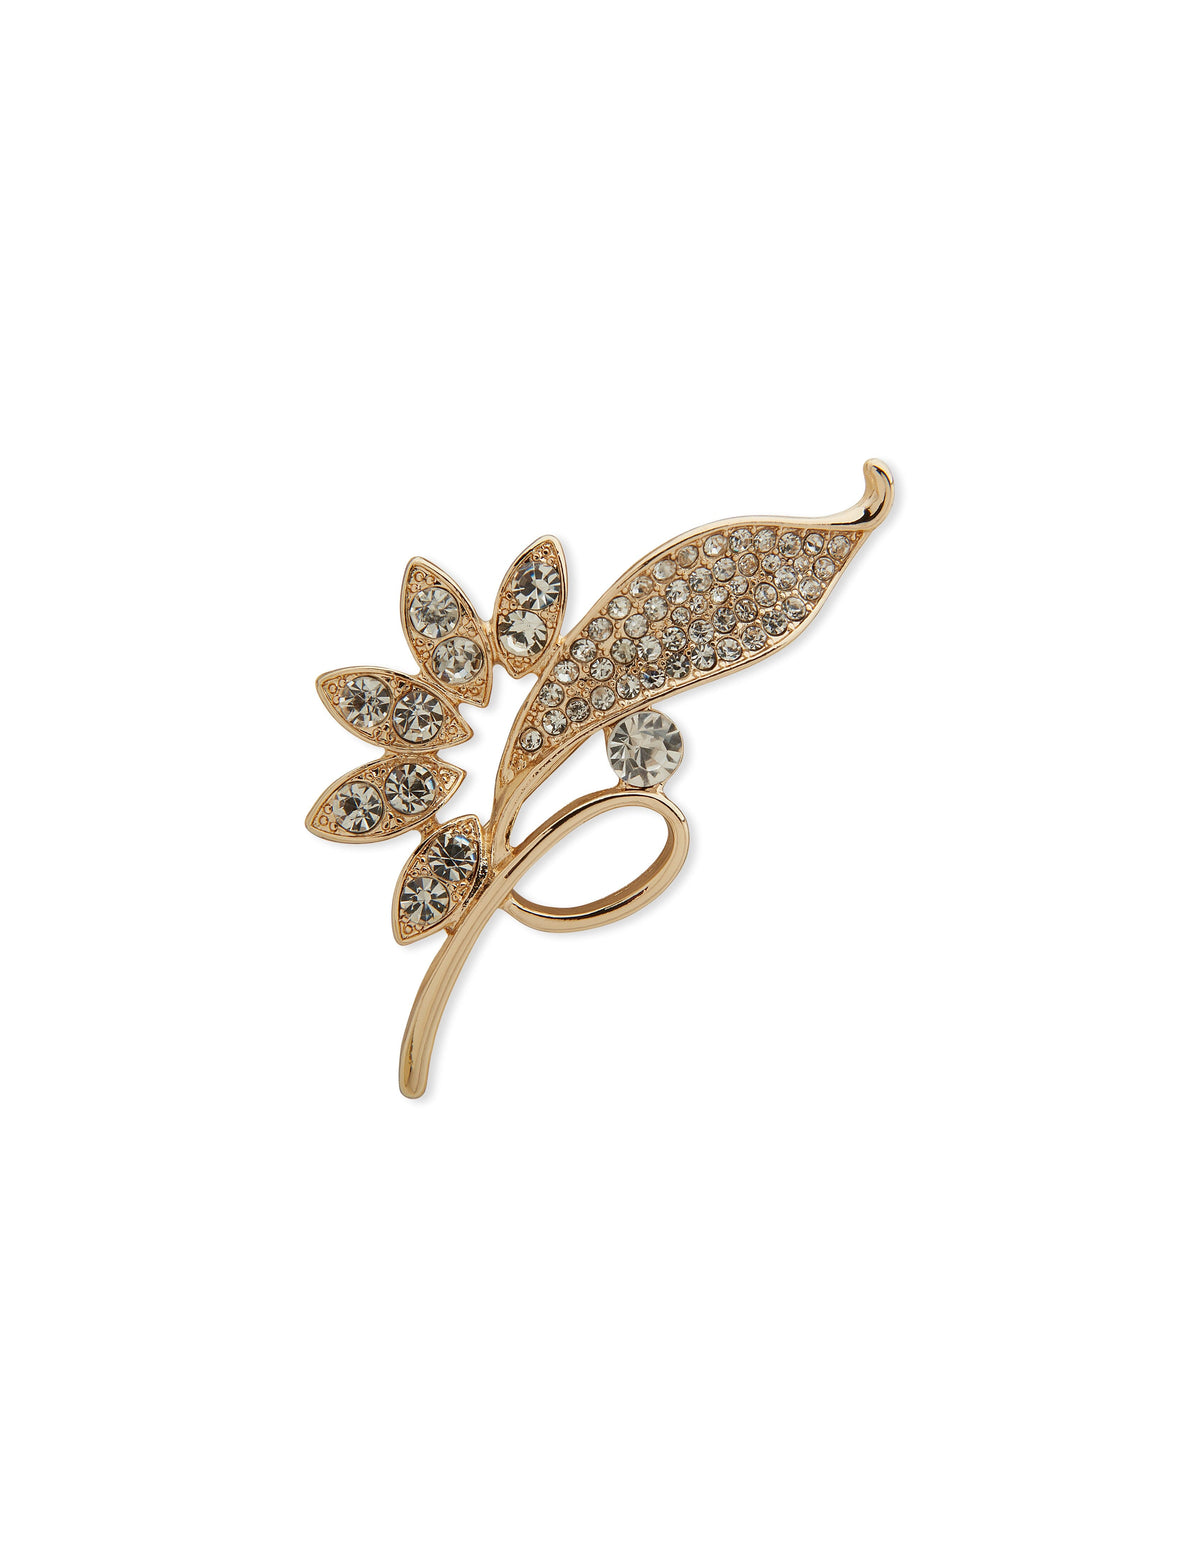 Anne Klein Gold Tone Crystal Leaf Pin in Gift Box